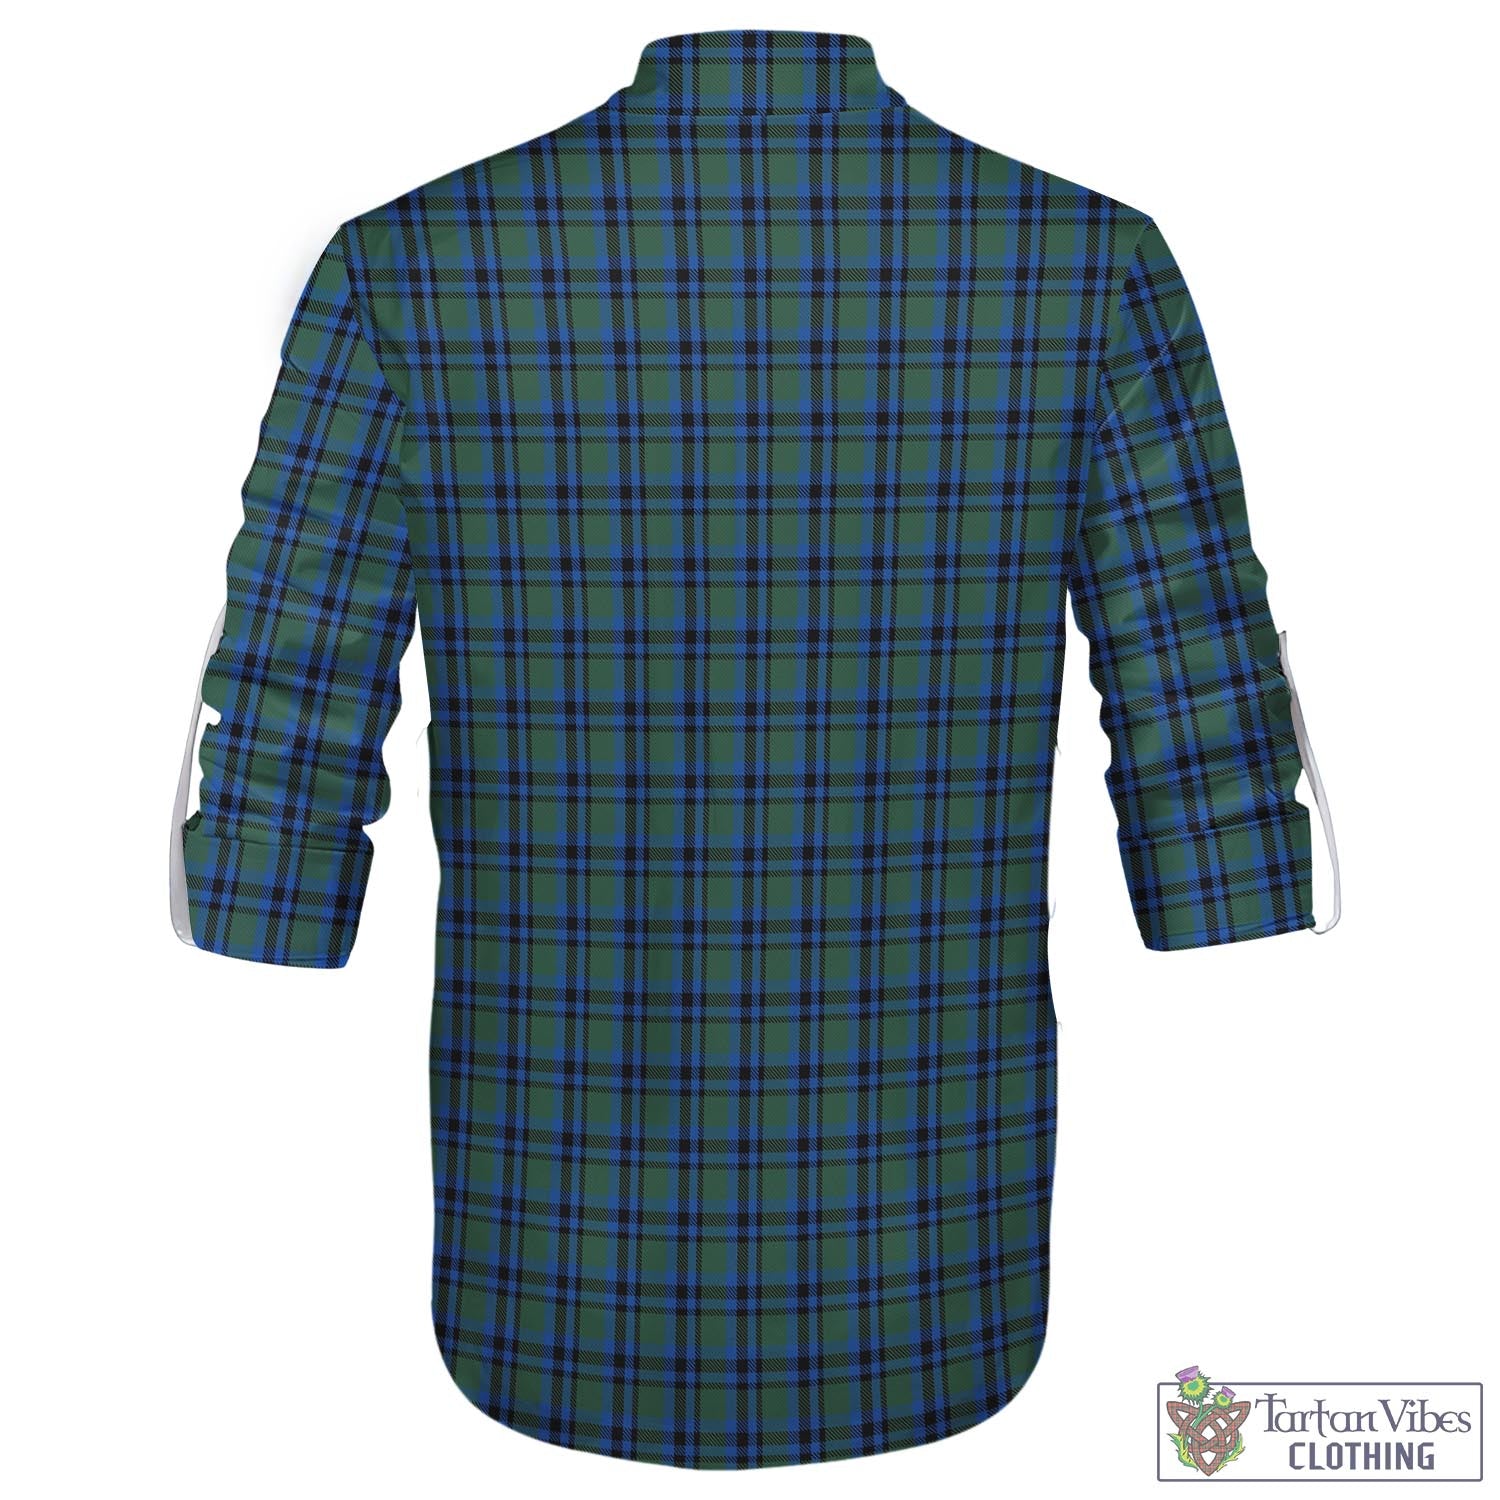 Tartan Vibes Clothing Falconer Tartan Men's Scottish Traditional Jacobite Ghillie Kilt Shirt